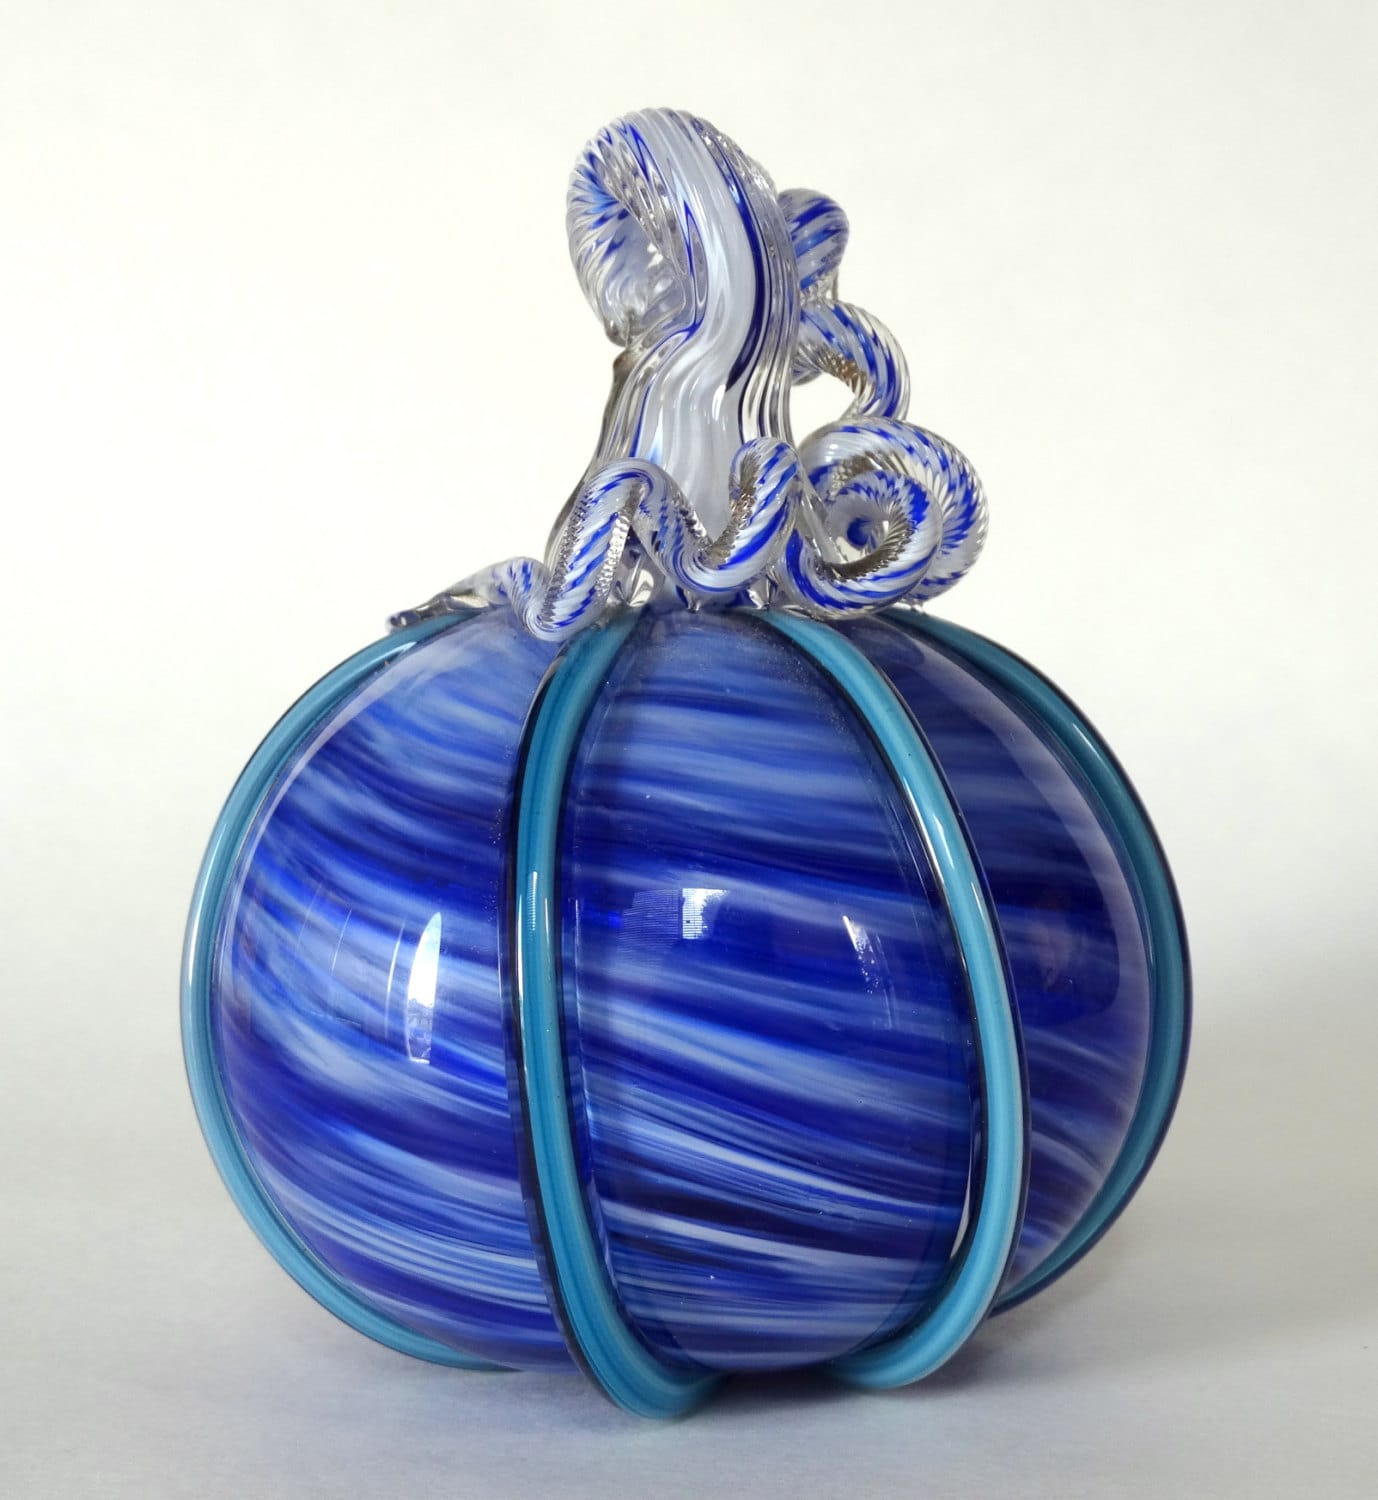 Hand Blown Glass Pumpkin Cobalt Blue and White Swirl with